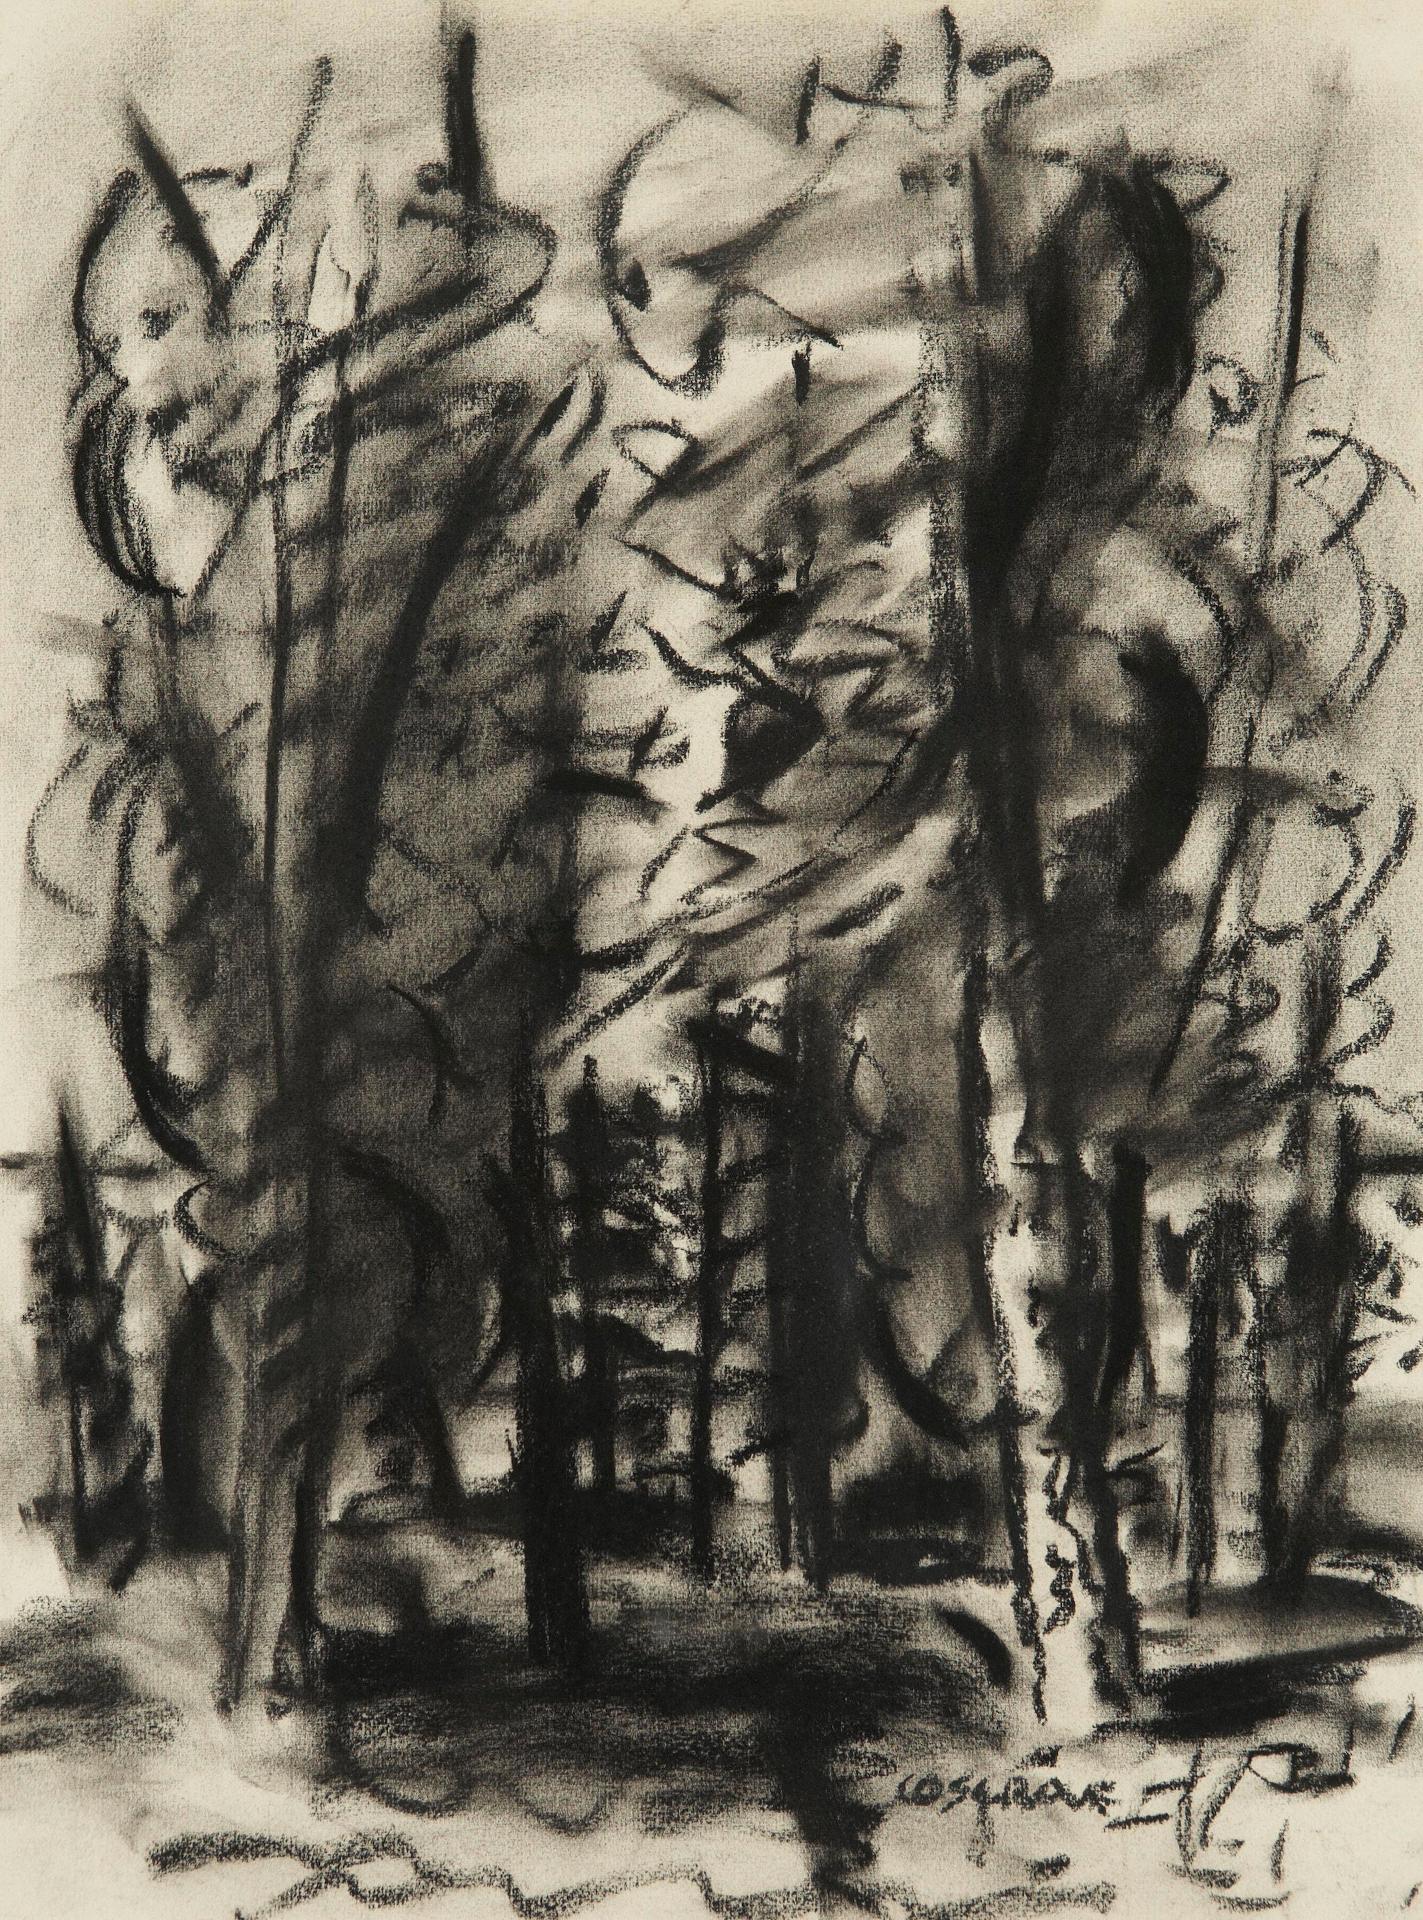 Stanley Morel Cosgrove (1911-2002) - Treescape